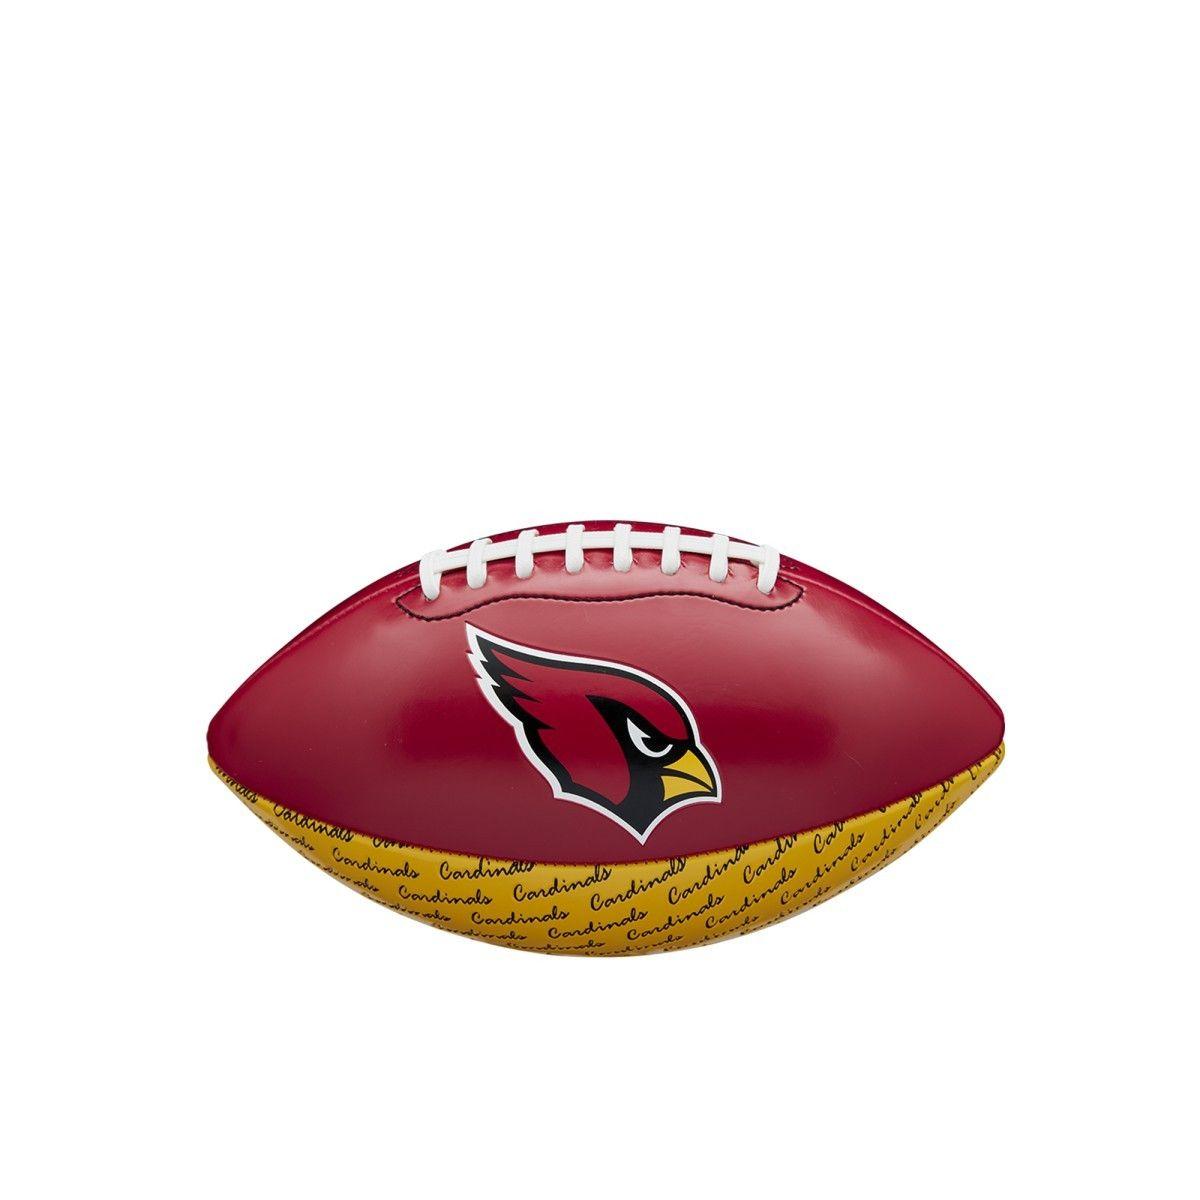 Cardnals Logo - Arizona Cardinals Retro Style Football | Wilson Sporting Goods